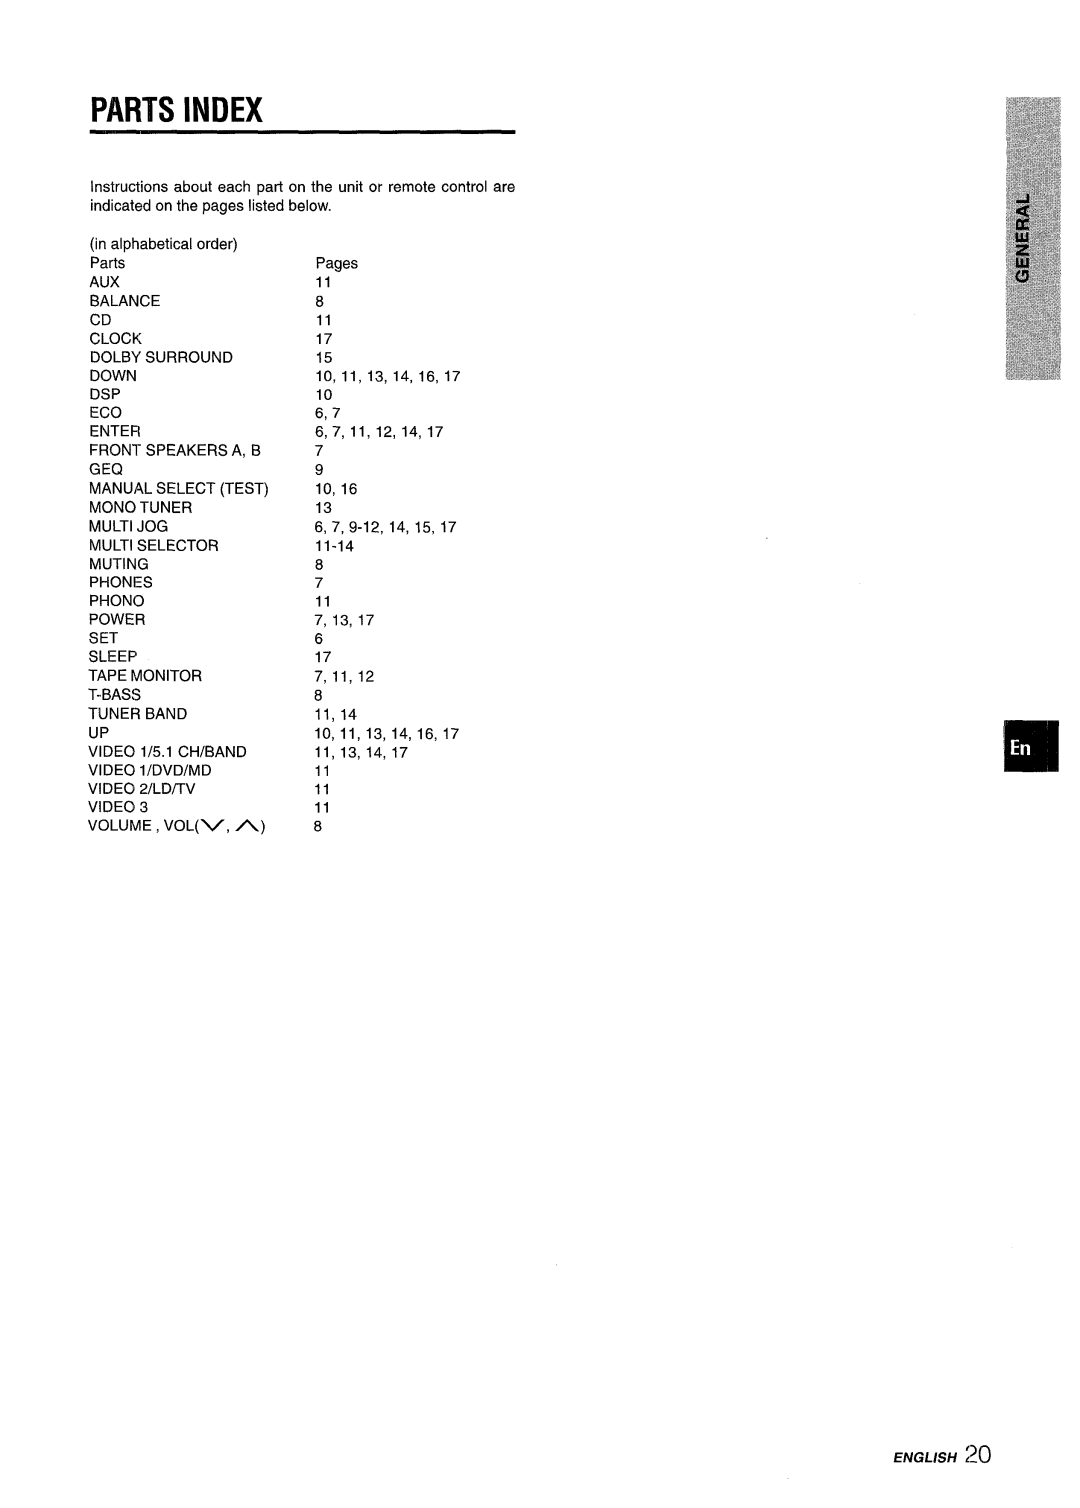 Aiwa AV-D35 manual Parts Index, English ?~ 